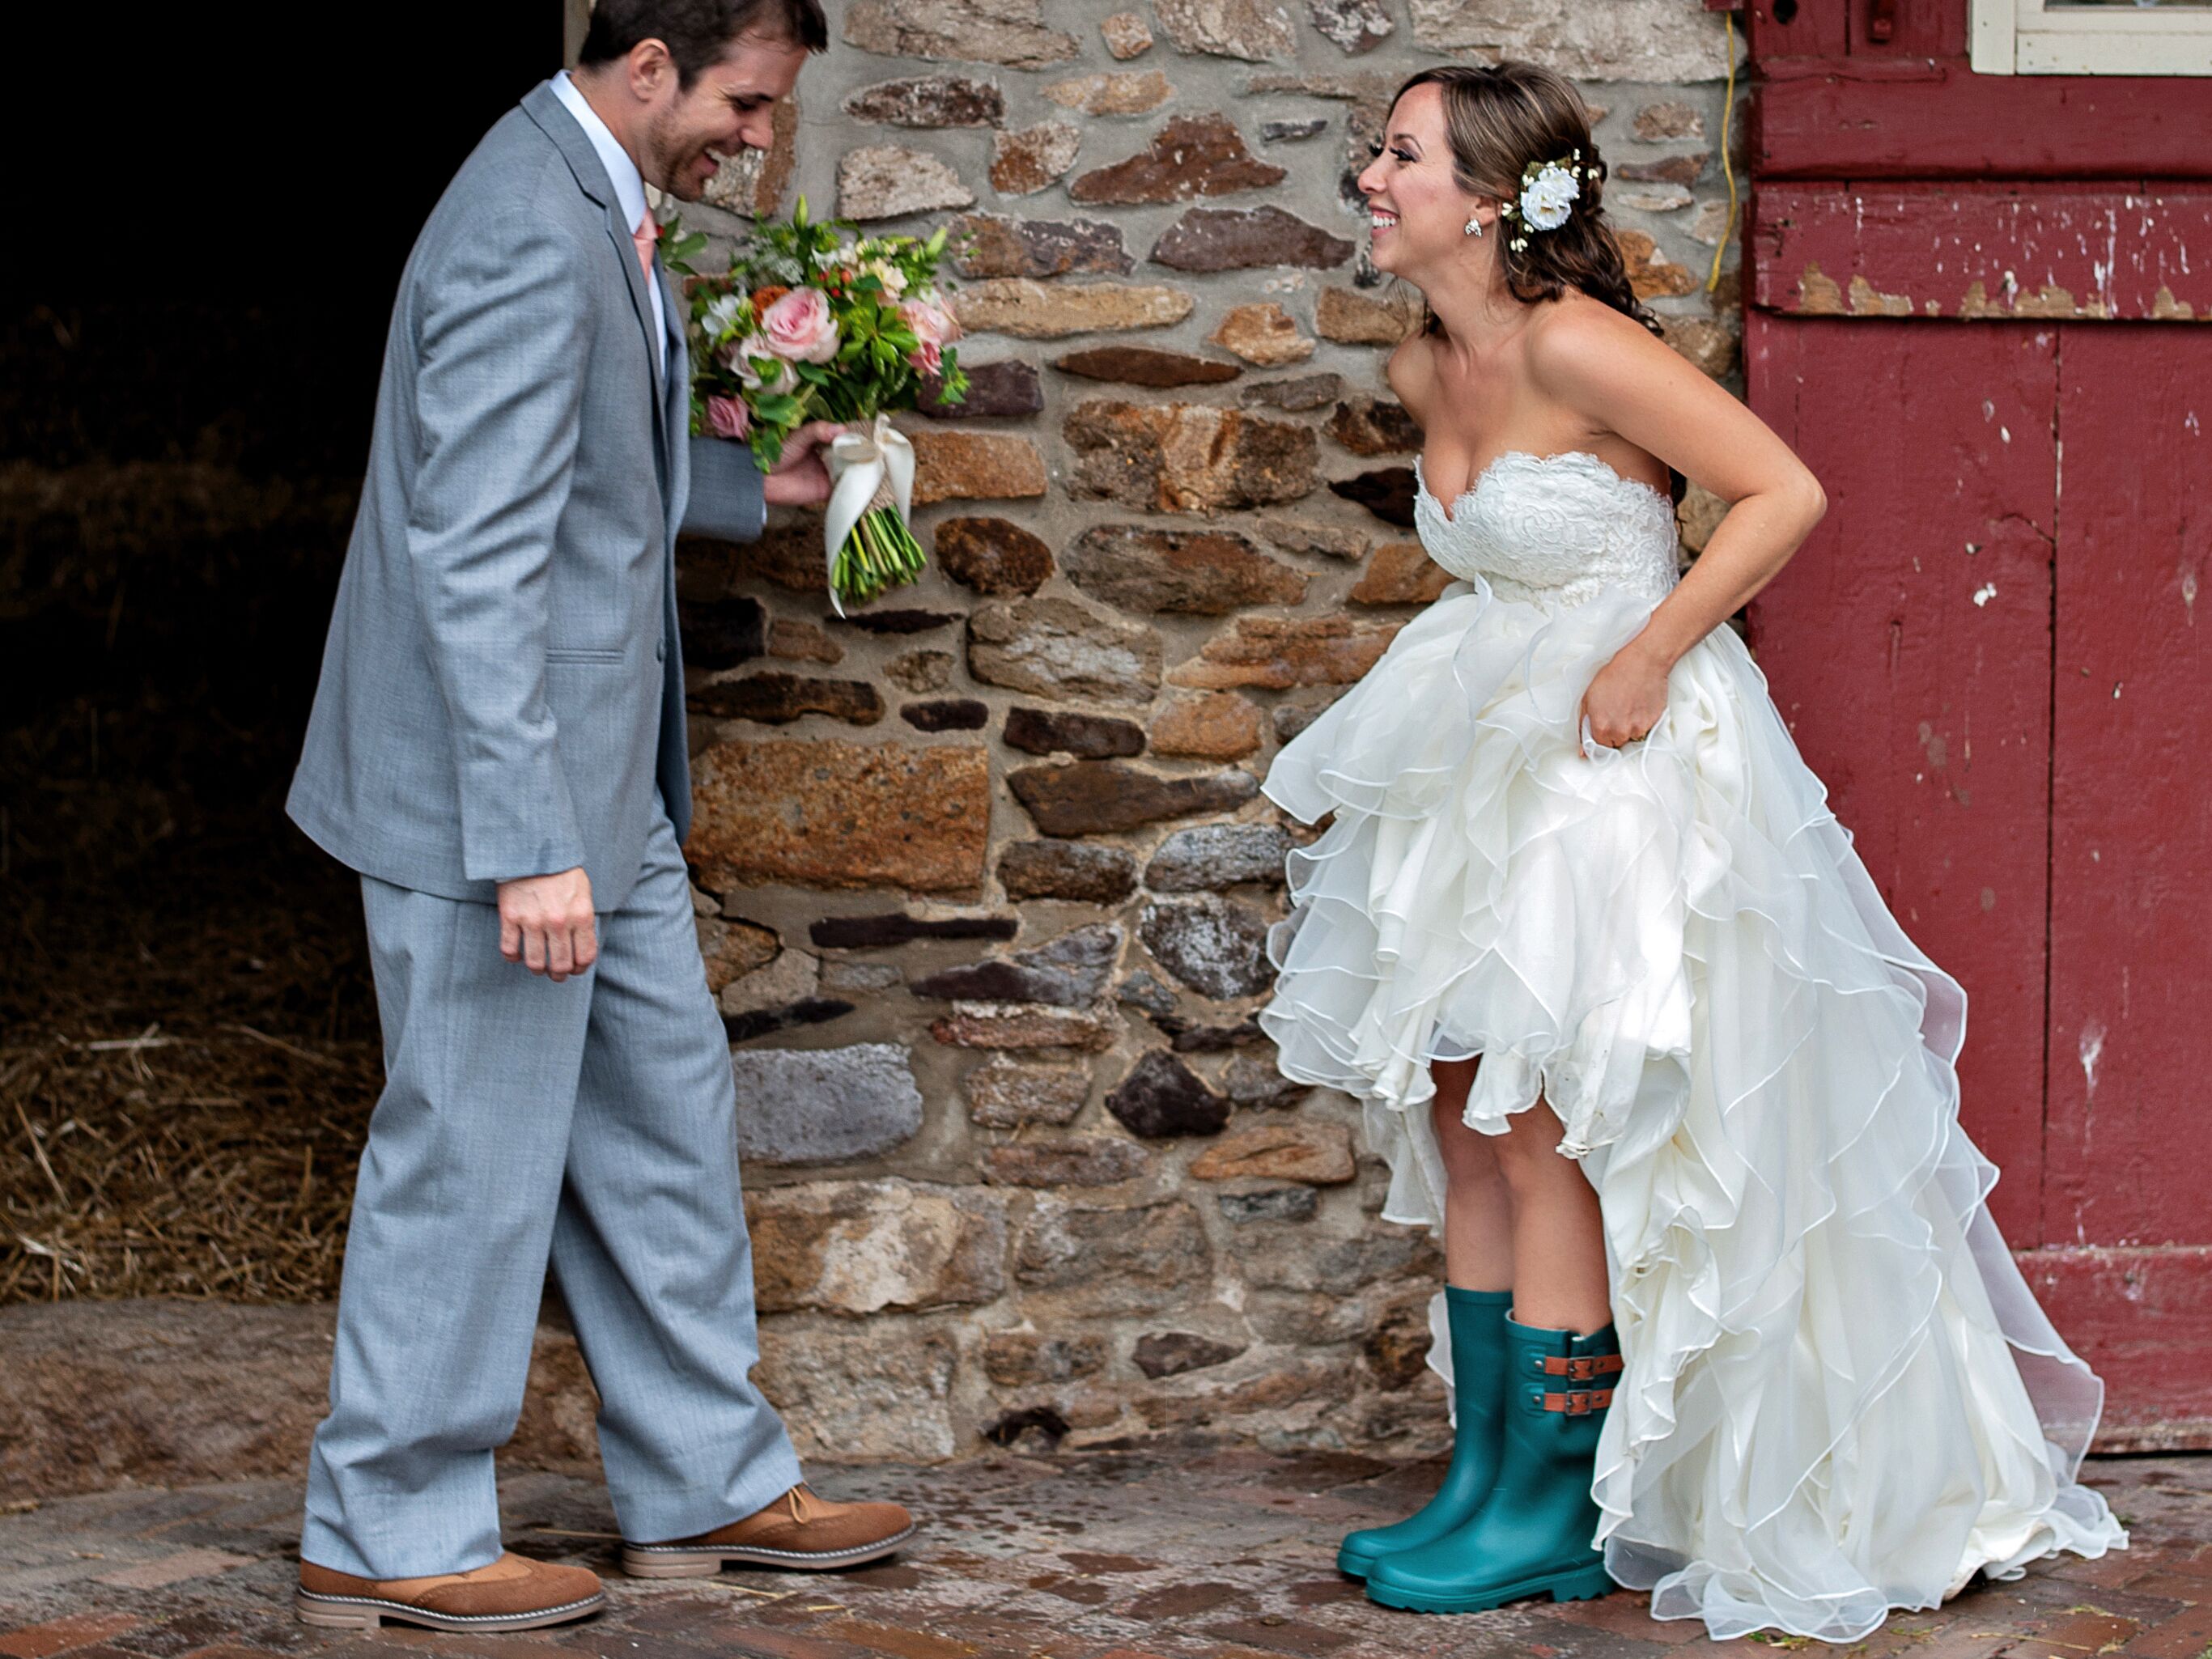 wedding-photography-disasters-photo-retouching-sample